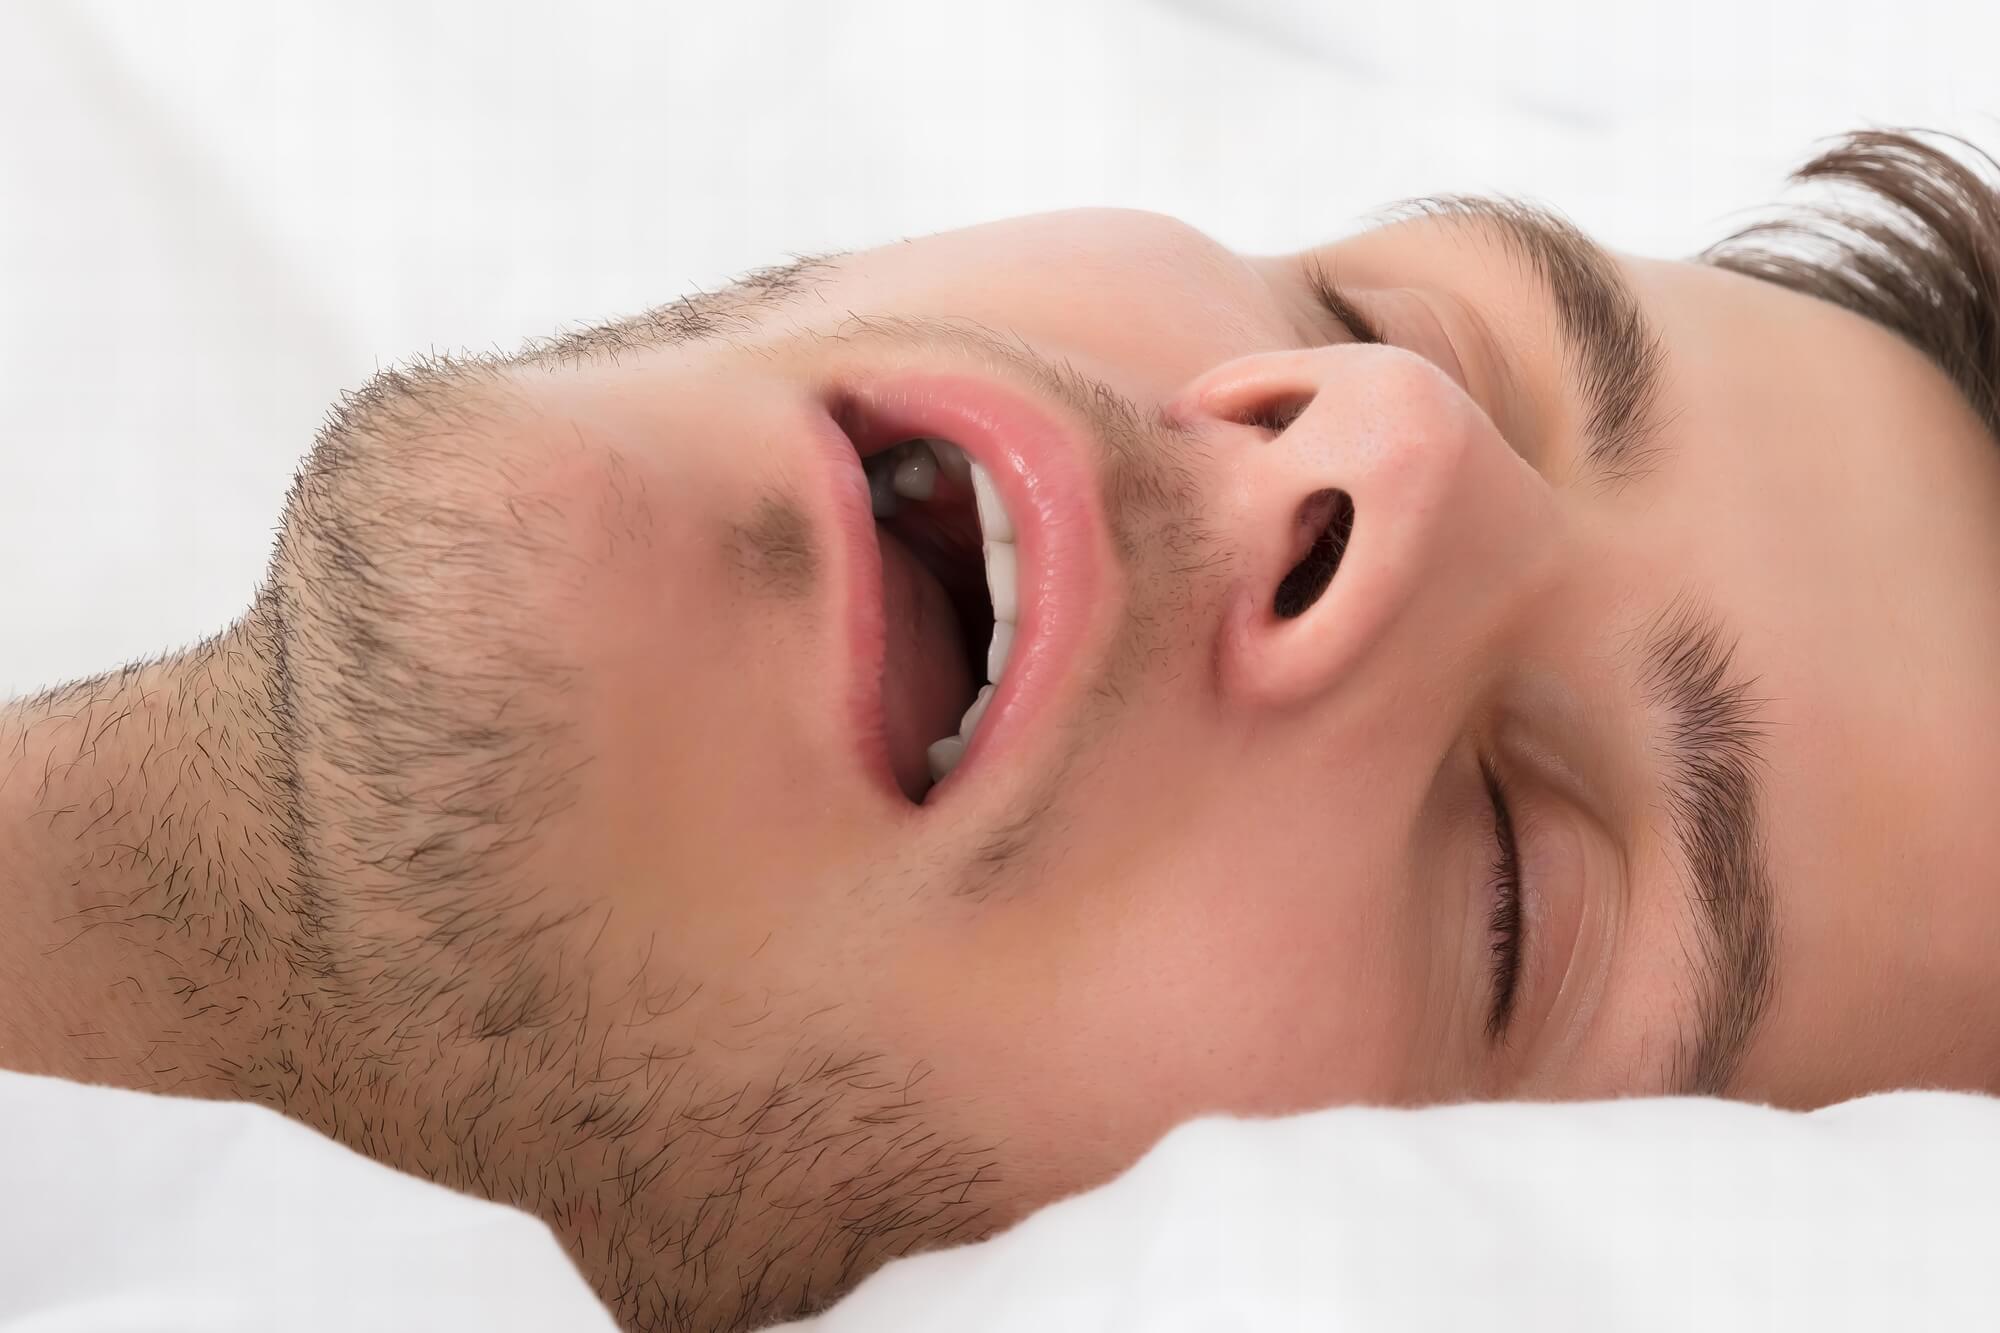 man with sleep apnea snoring